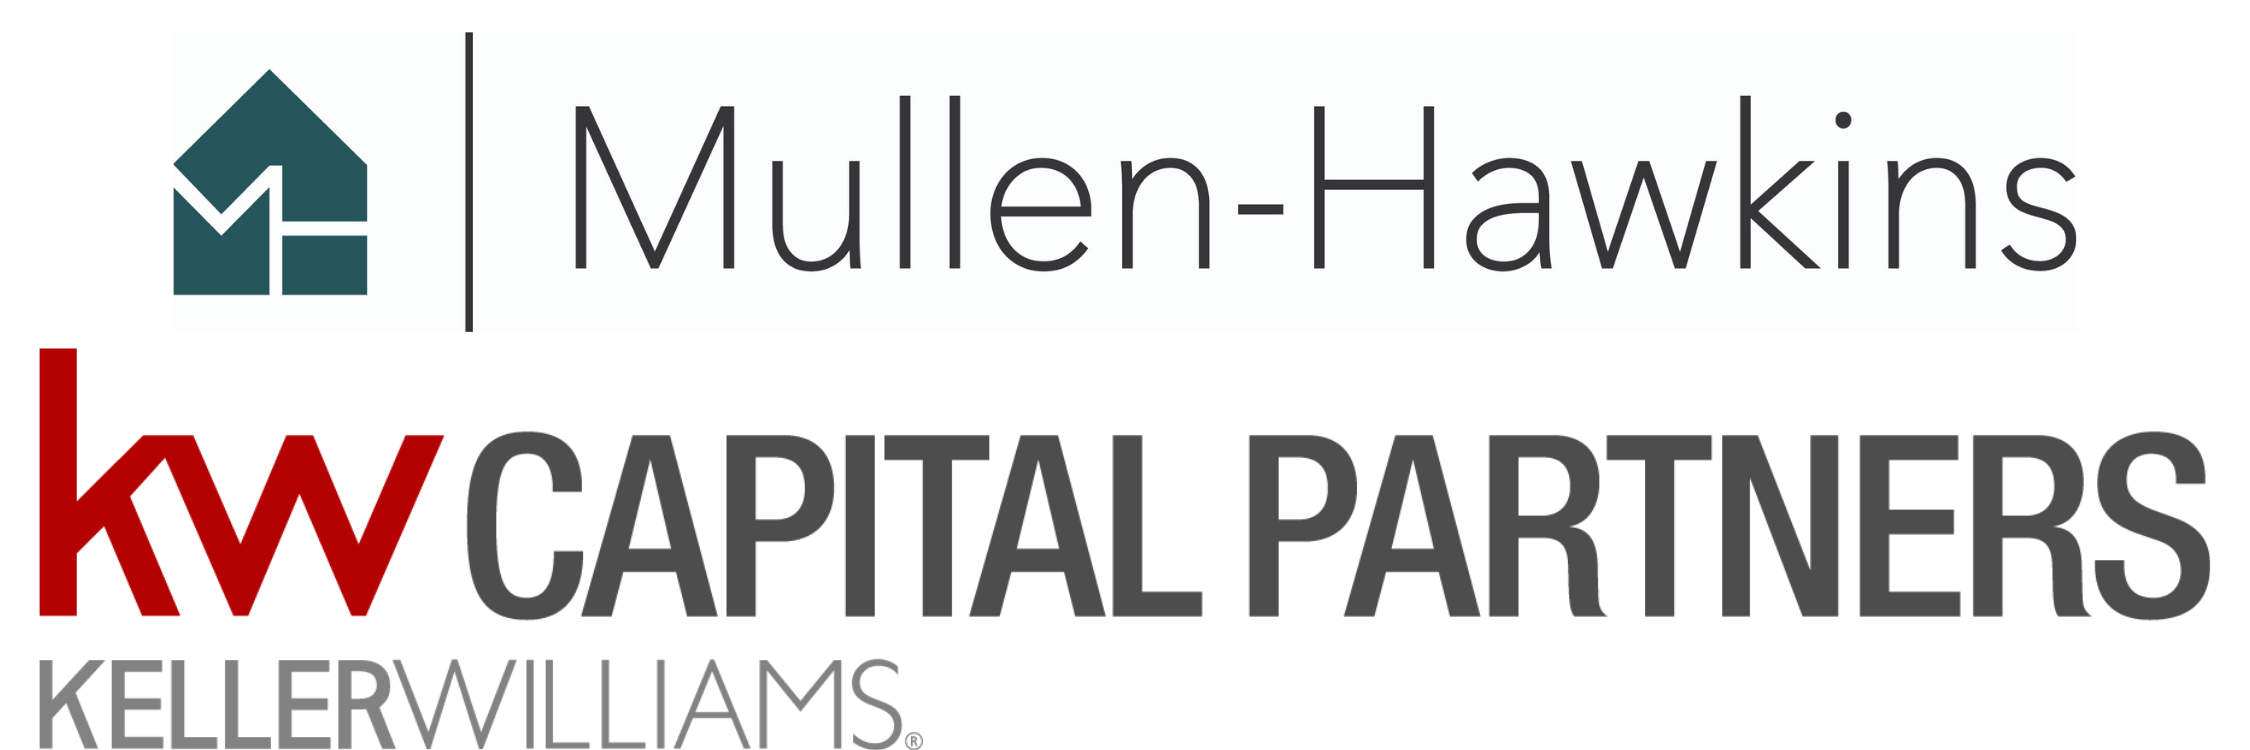 MULLEN-HAWKINS: REALTORS Sarah Mullen & Cathi Hawkins, Keller Williams Capital Partners Realty